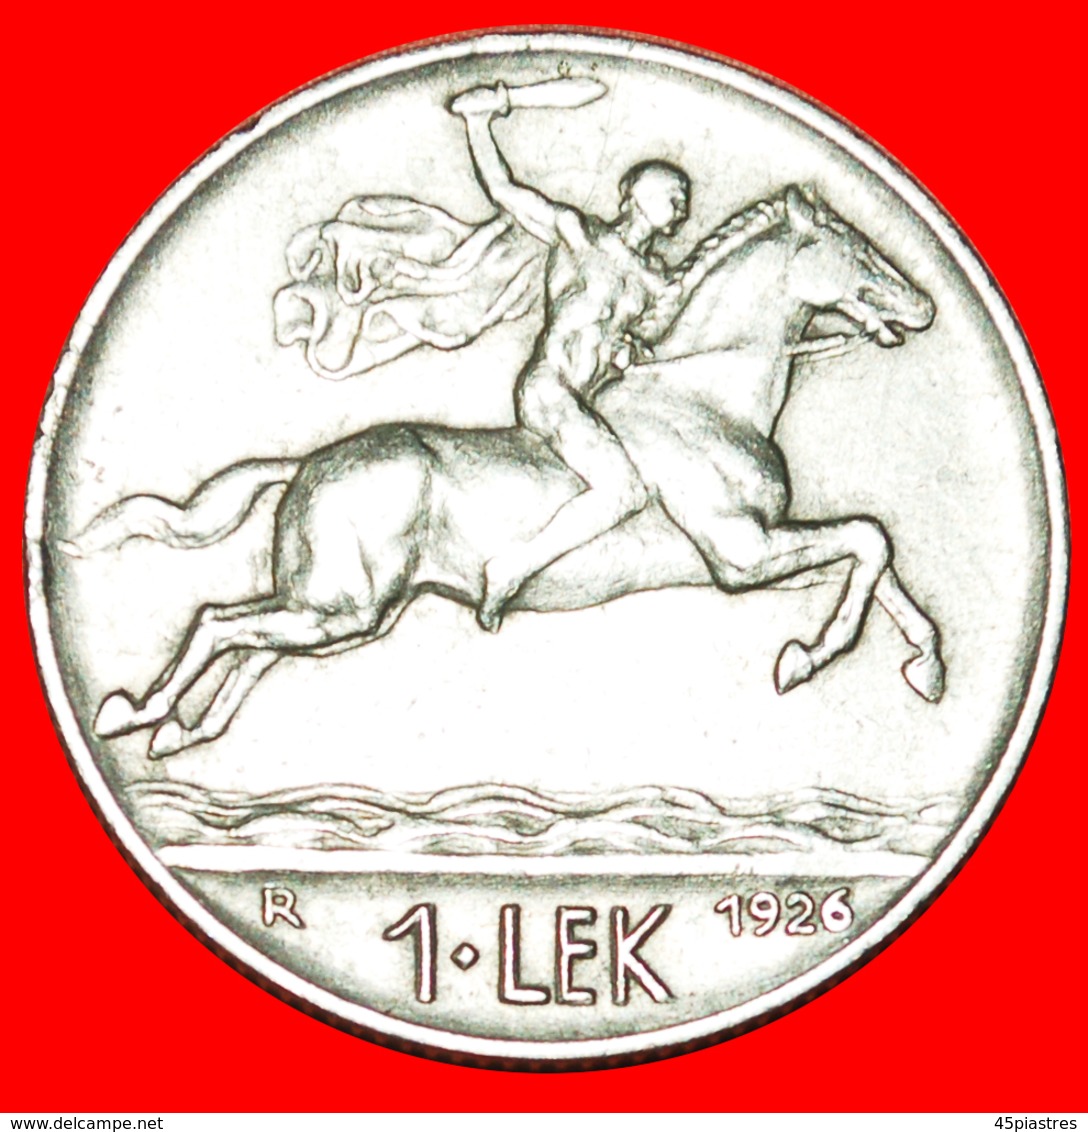 + ITALY: ALBANIA  1 LEK 1926R! ALEXANDER THE GREAT (336-323 BCE)! LOW START  NO RESERVE! - Albanien